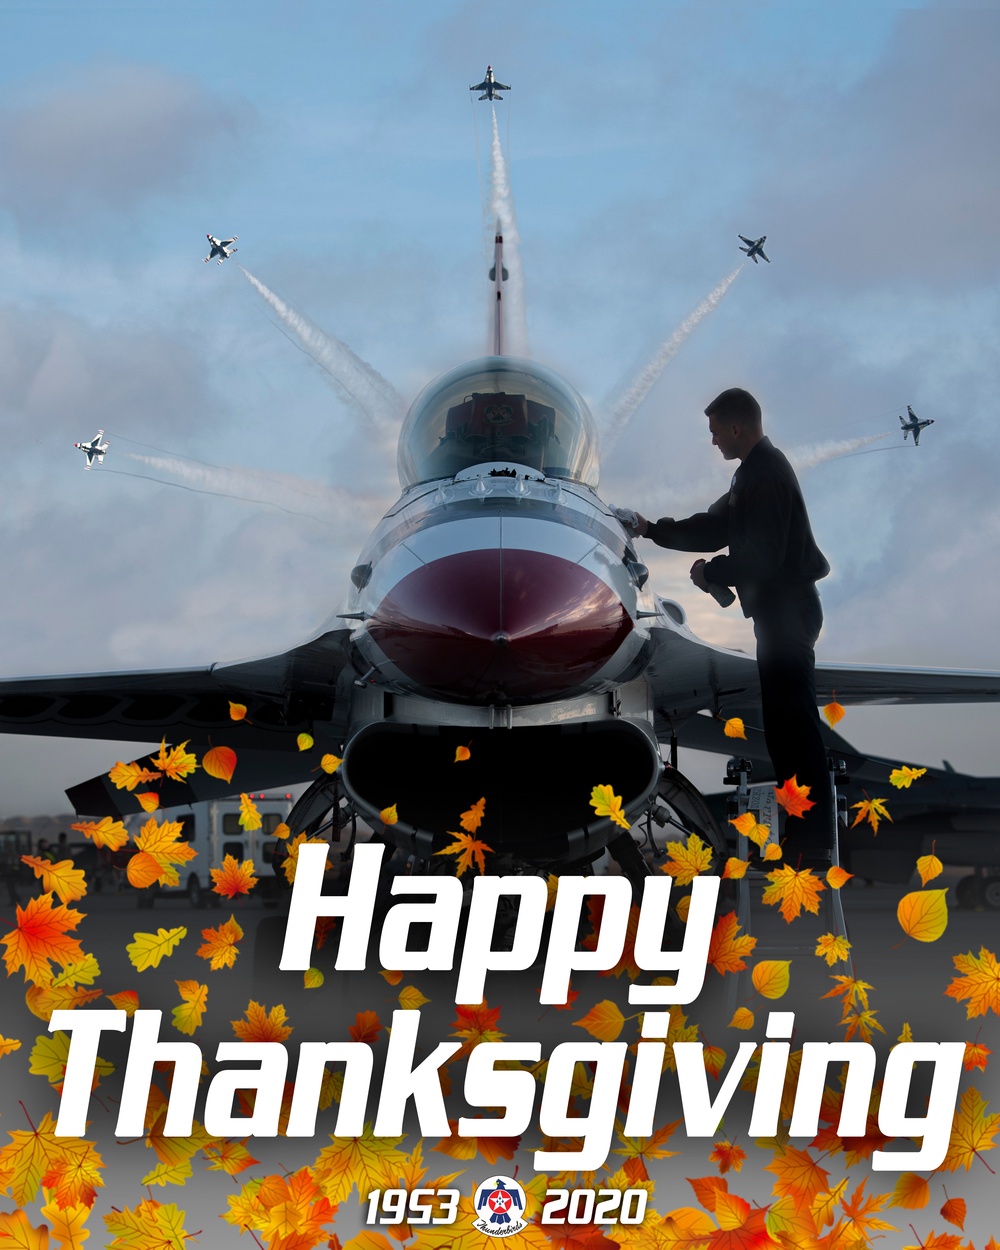 Thunderbirds give thanks